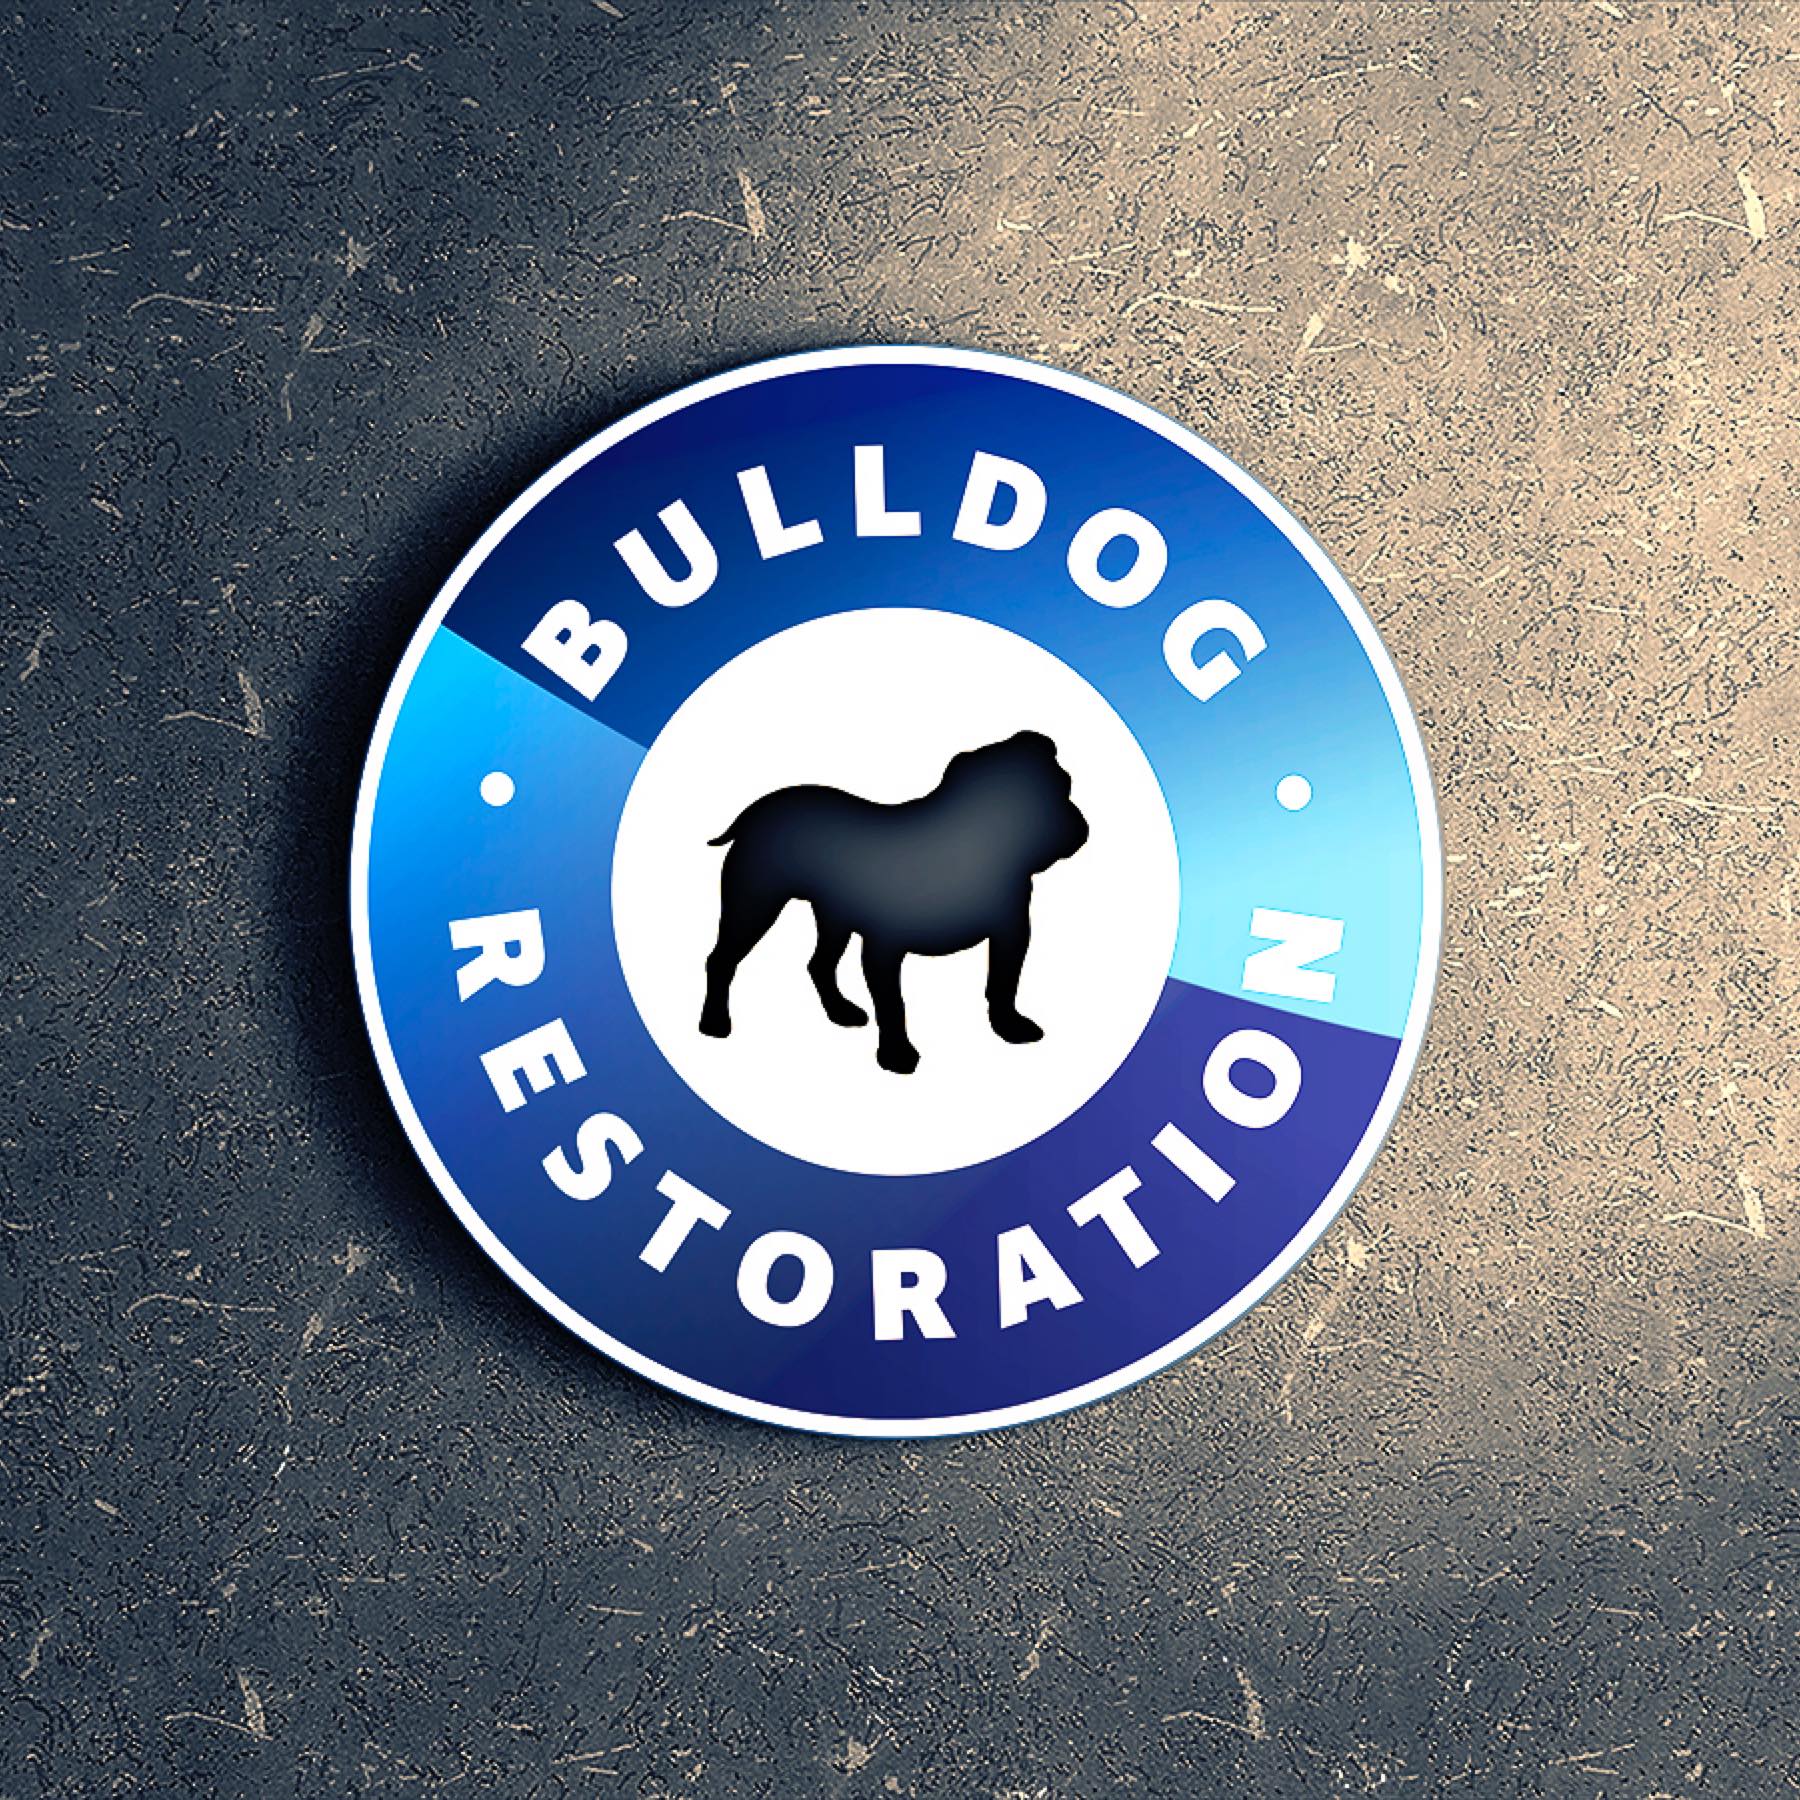 Bulldog-Cleaning-And-Restoration-Huntingdon-Valley-PA-19006.jpg